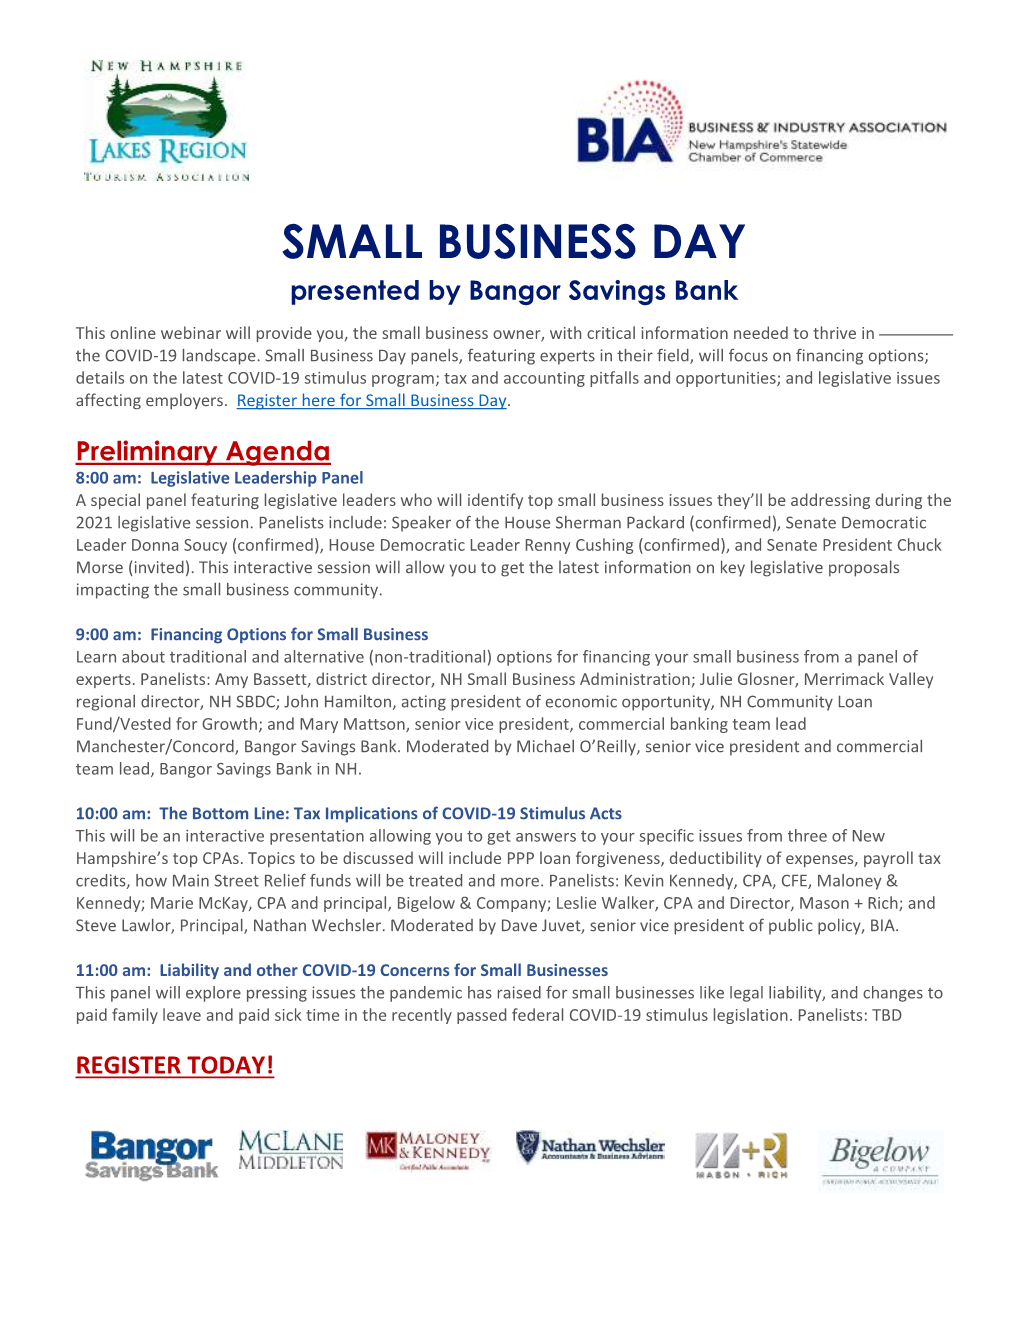 SMALL BUSINESS DAY Presented by Bangor Savings Bank